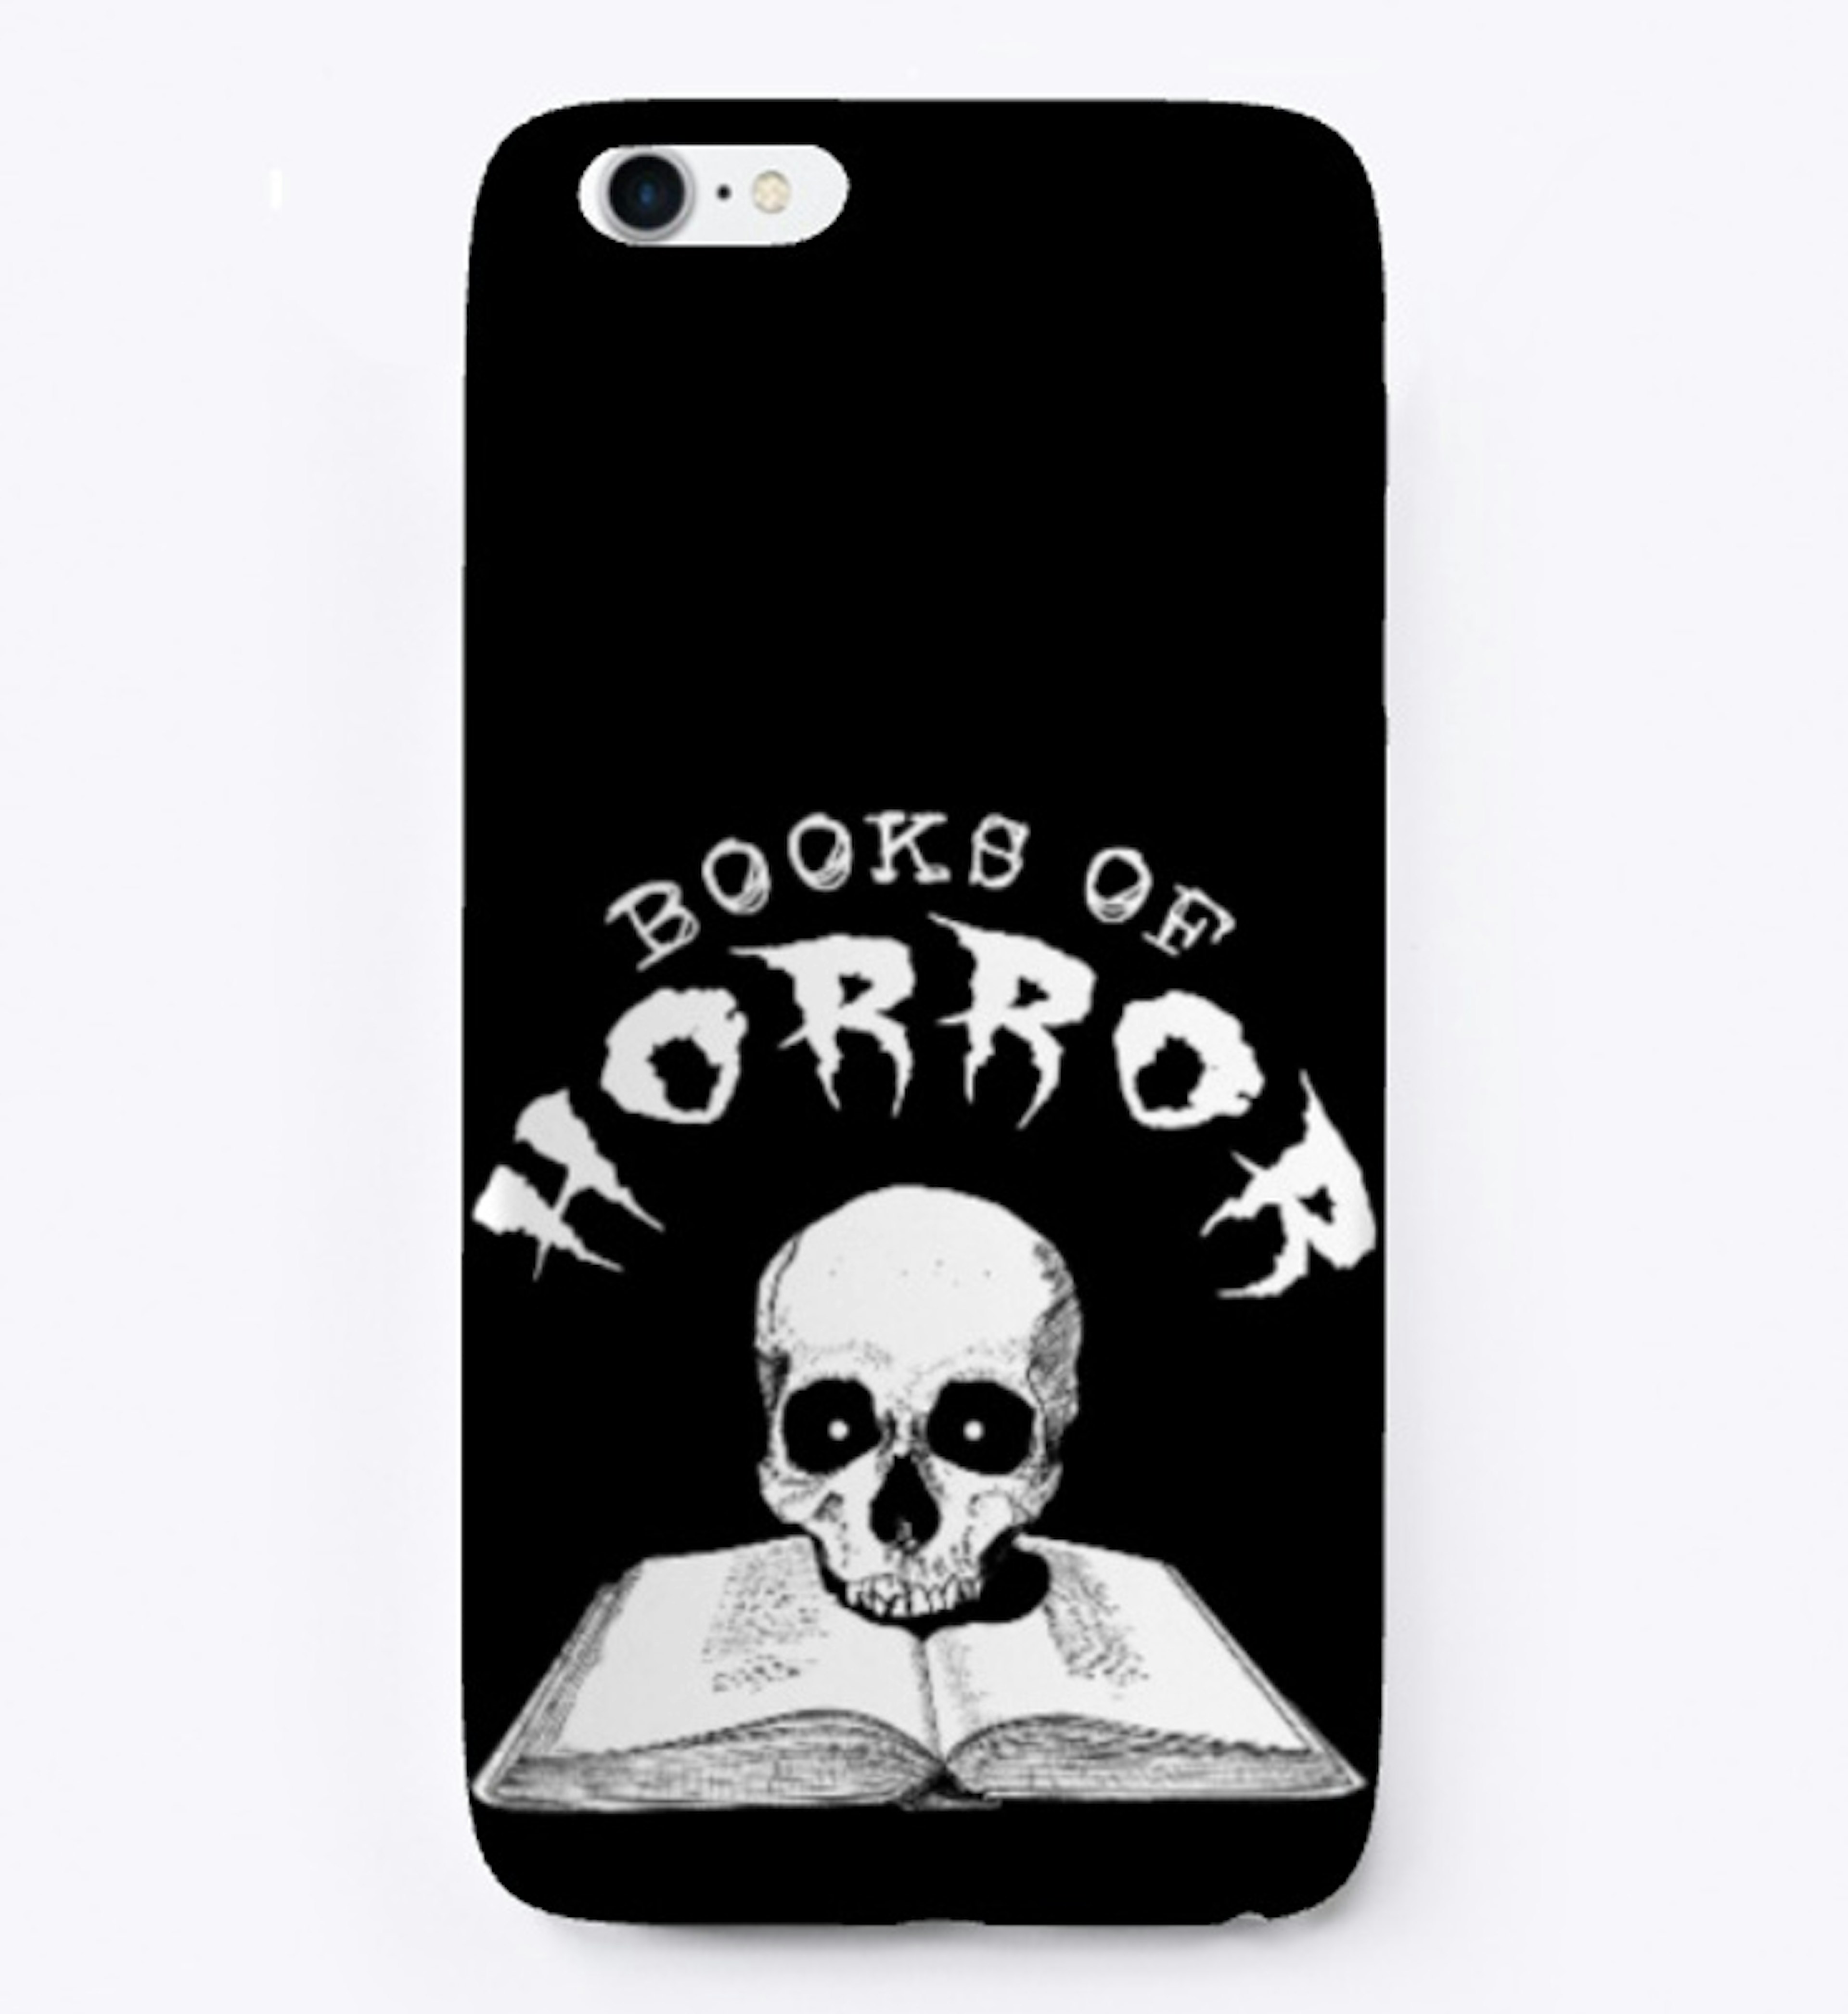 Books of Horror Phone Case